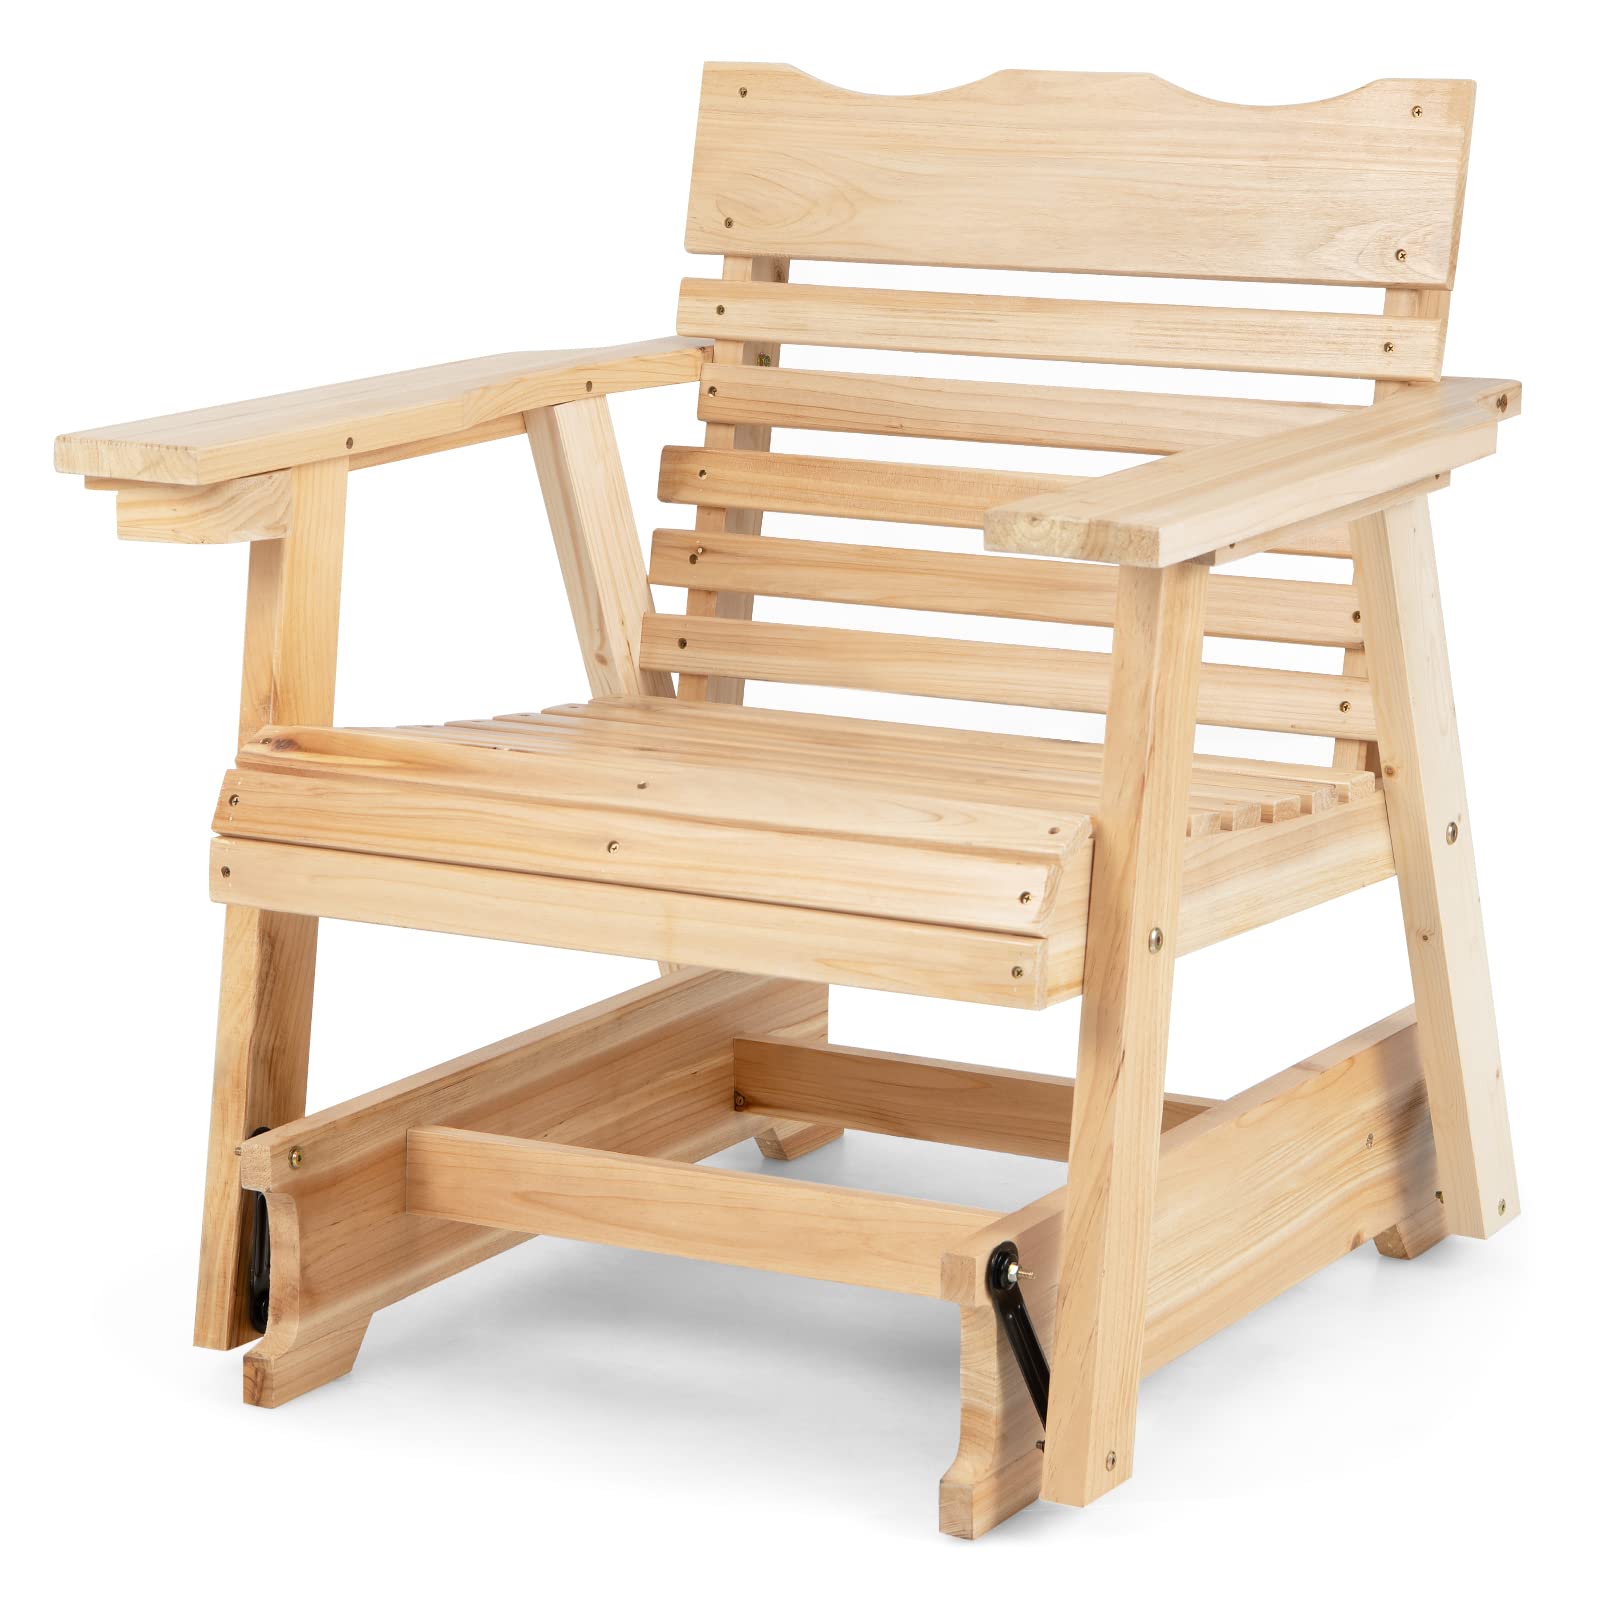 Giantex Outdoor Glider Rocking Chair - Set of 2 Wood Porch Rocker